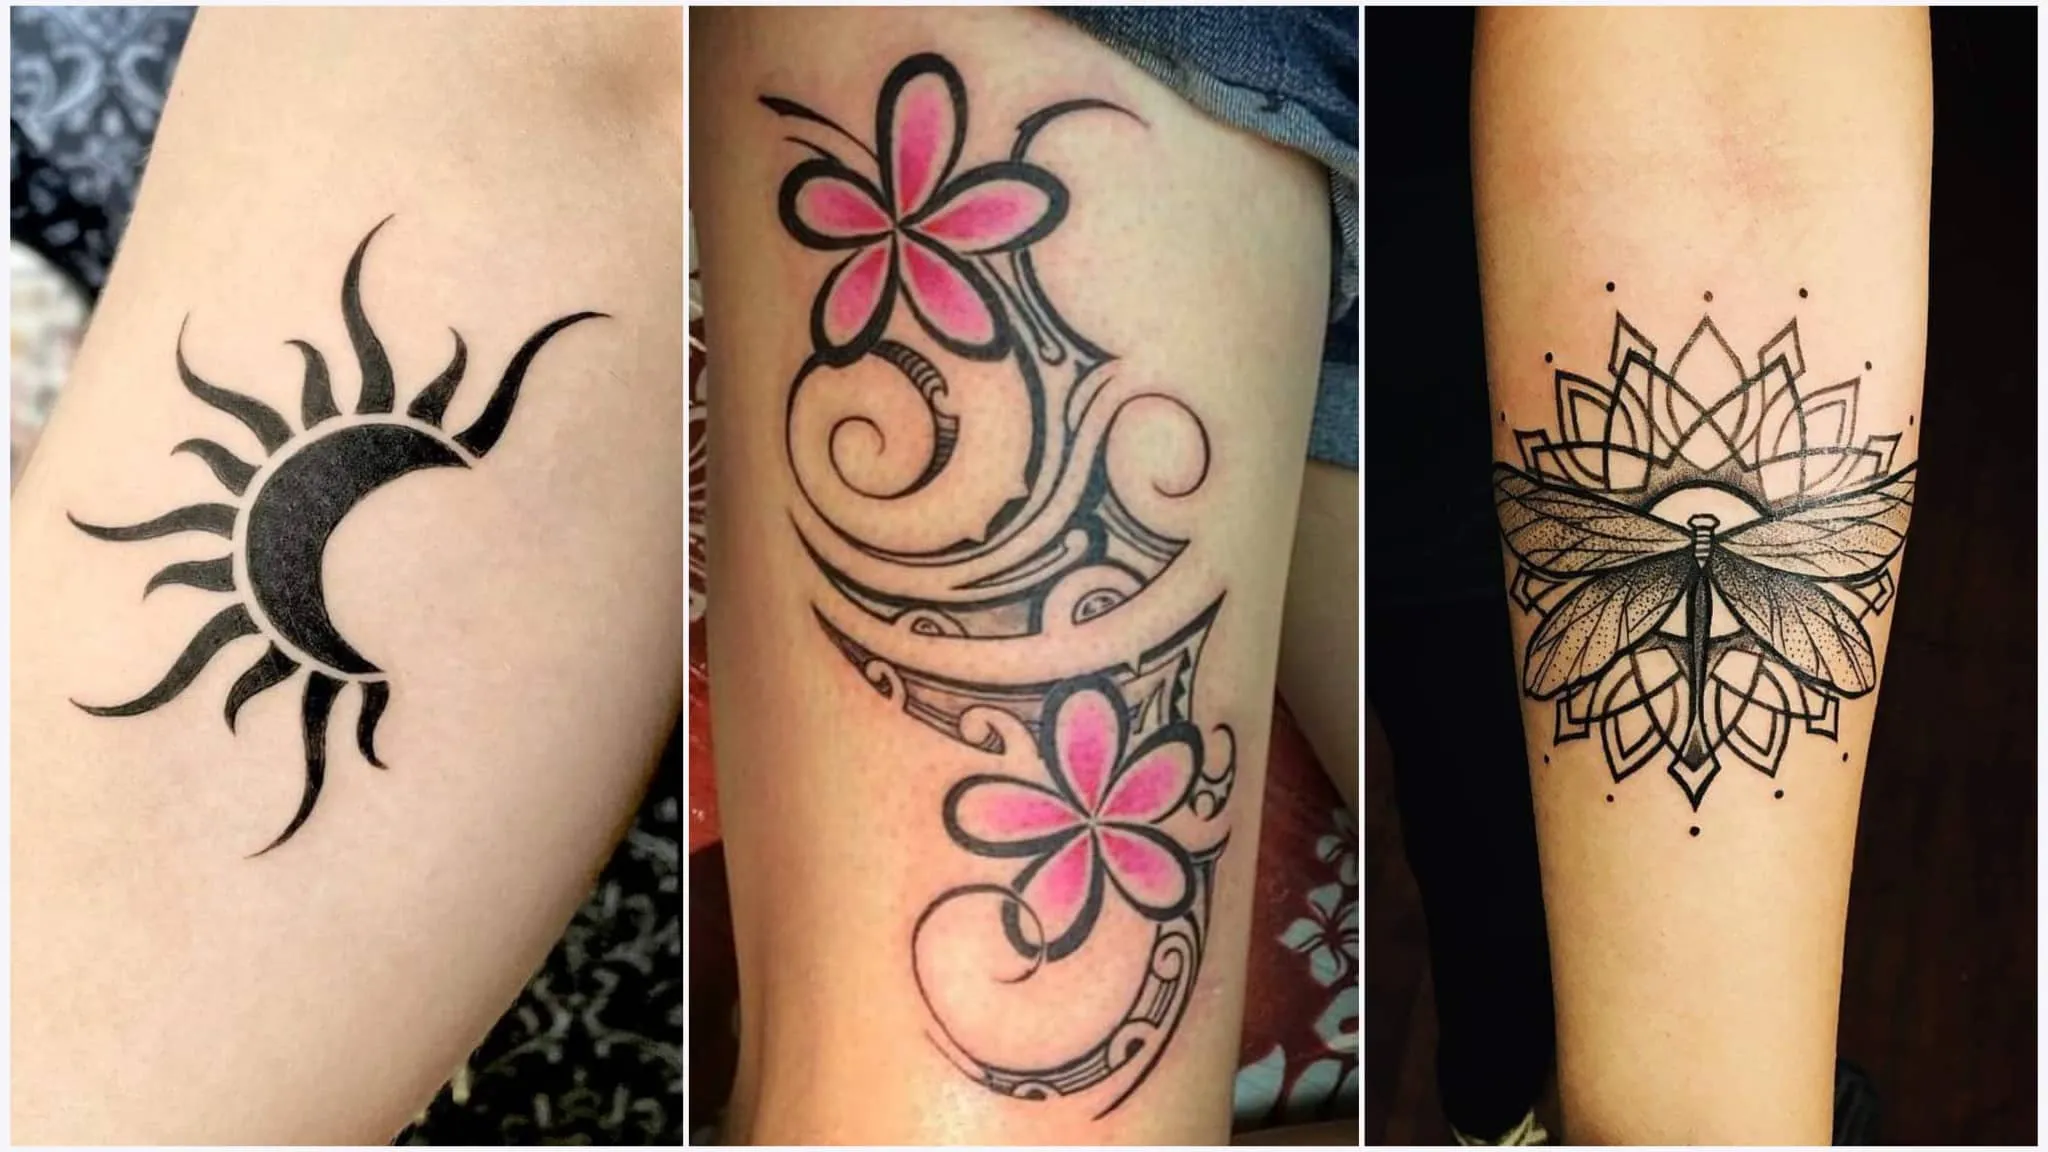 7 Tattoos As Symbols Of Protection | Tattoo Ideas | Protection tattoo,  Protection tattoo symbols, Wiccan tattoos